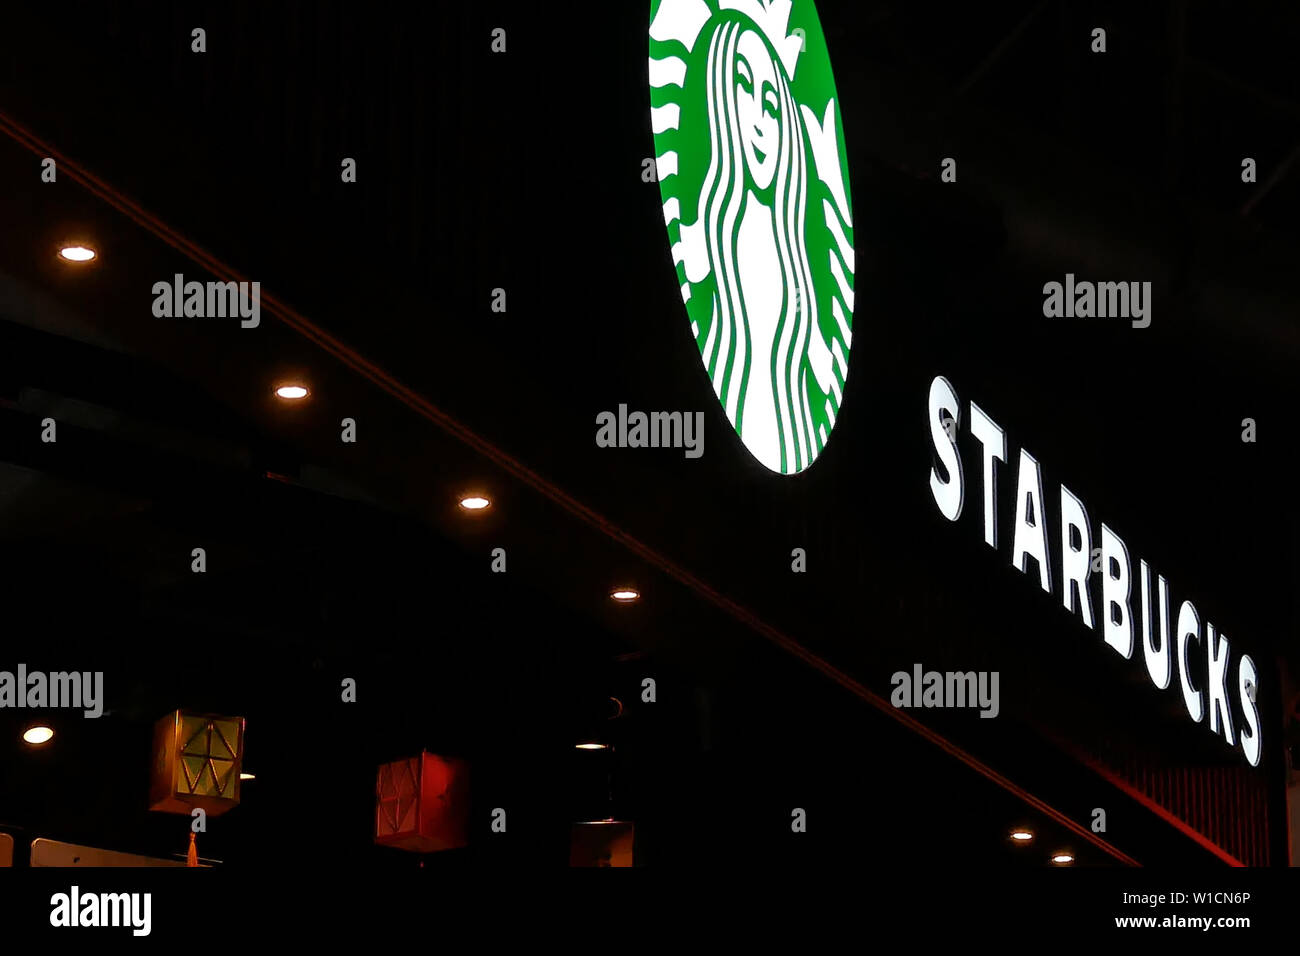 Close up of Starbucks logo on dark night Stock Photo